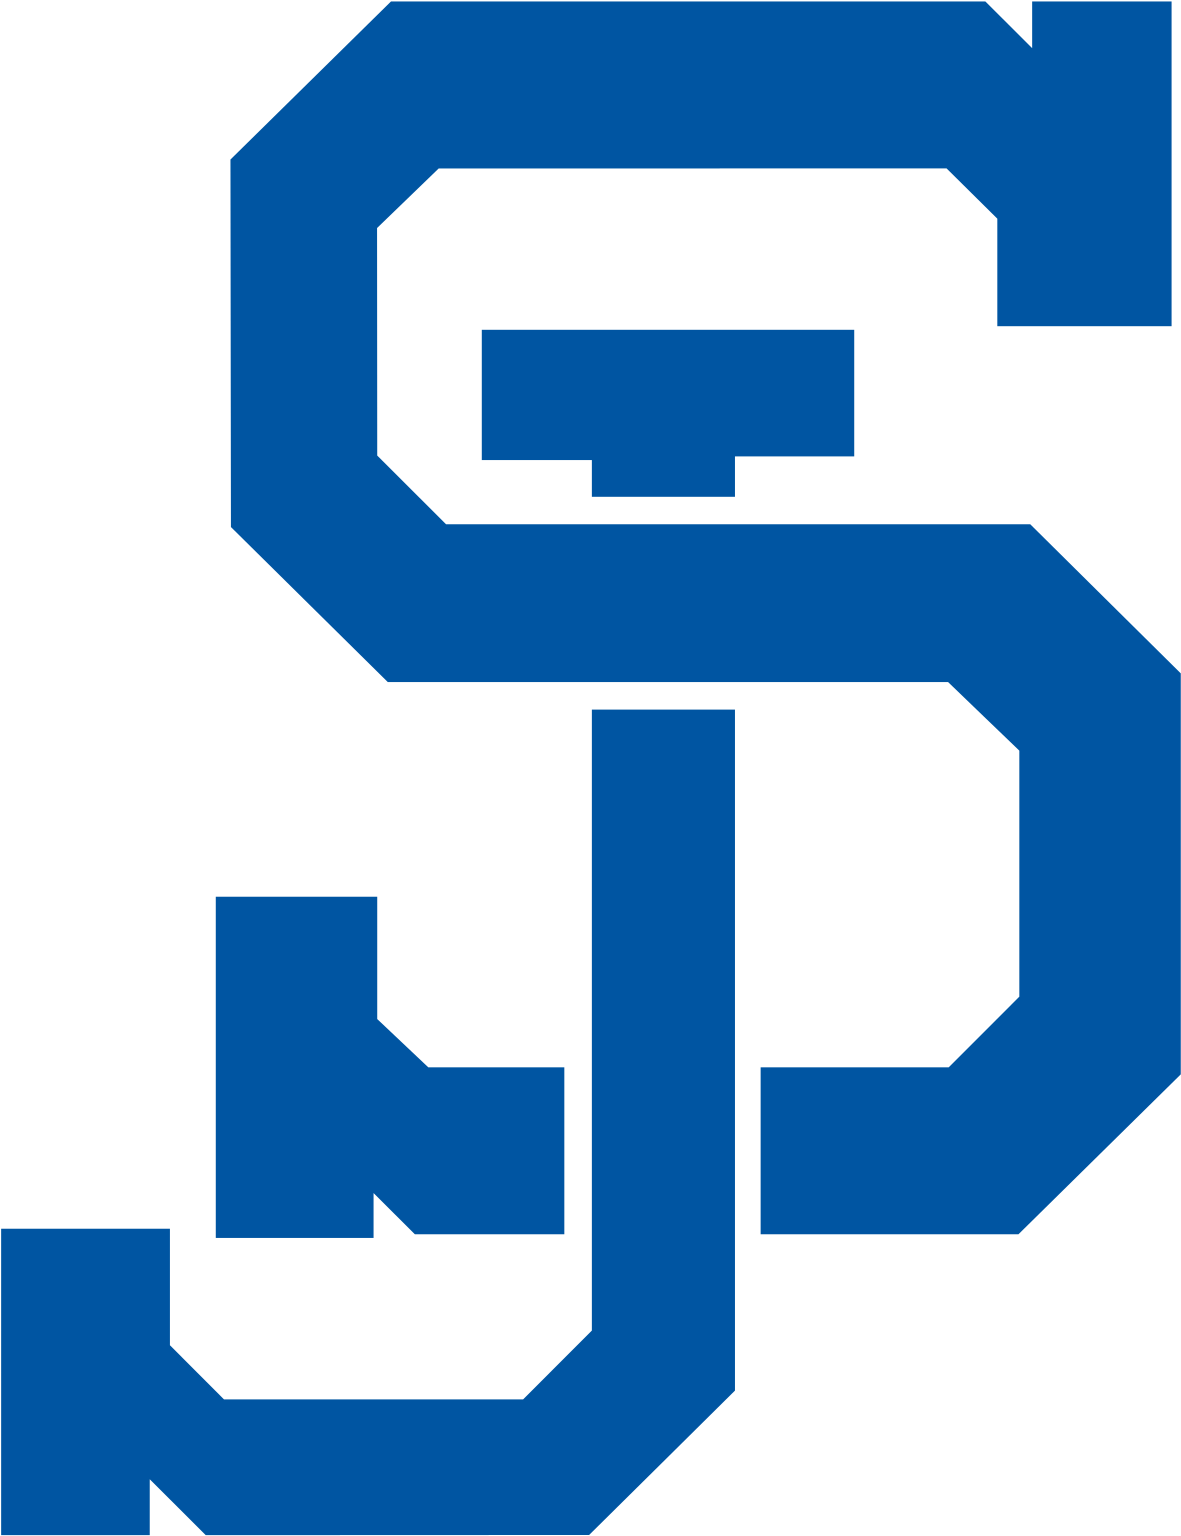 San Jose State Spartans (1200x1554)